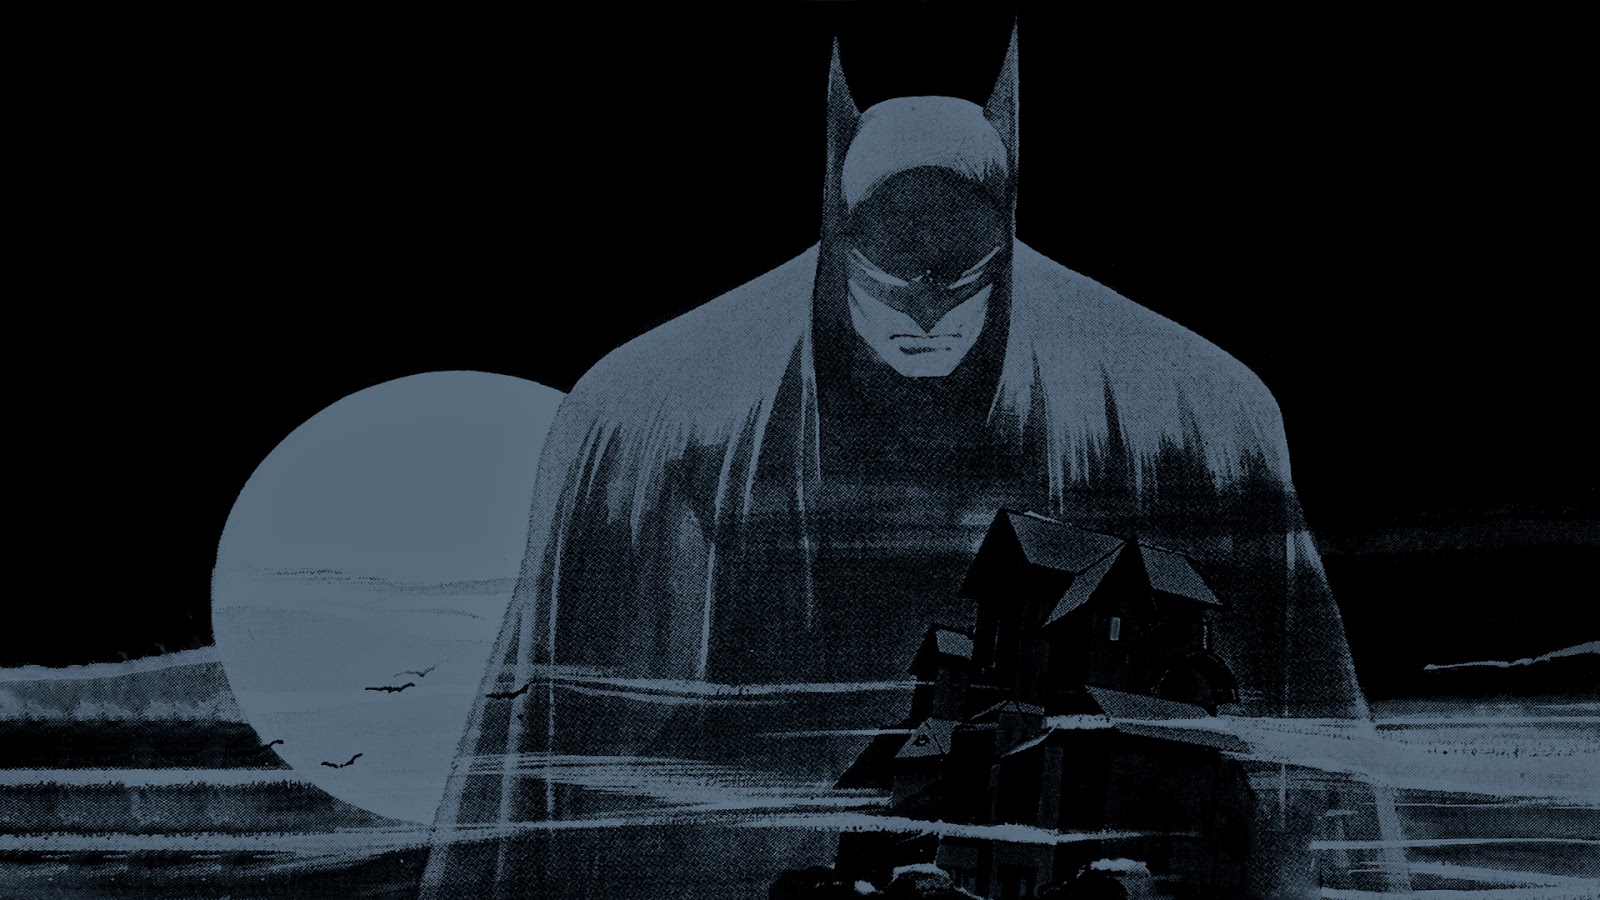 batman computer wallpaper,batman,fictional character,superhero,justice league,black and white